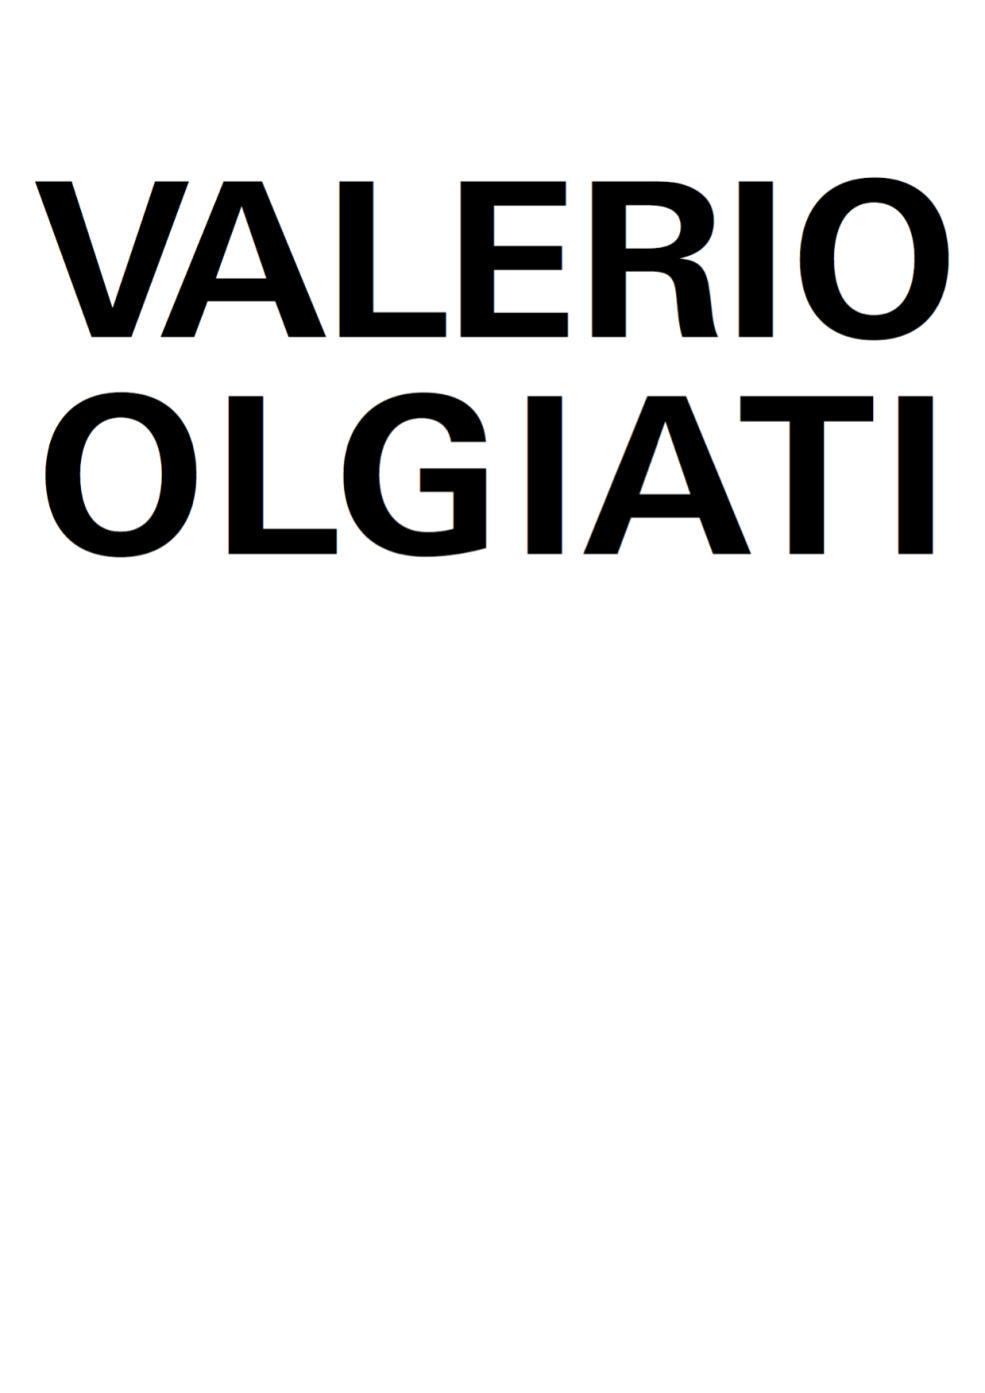 Vergrösserte Ansicht: Valerio Olgiati